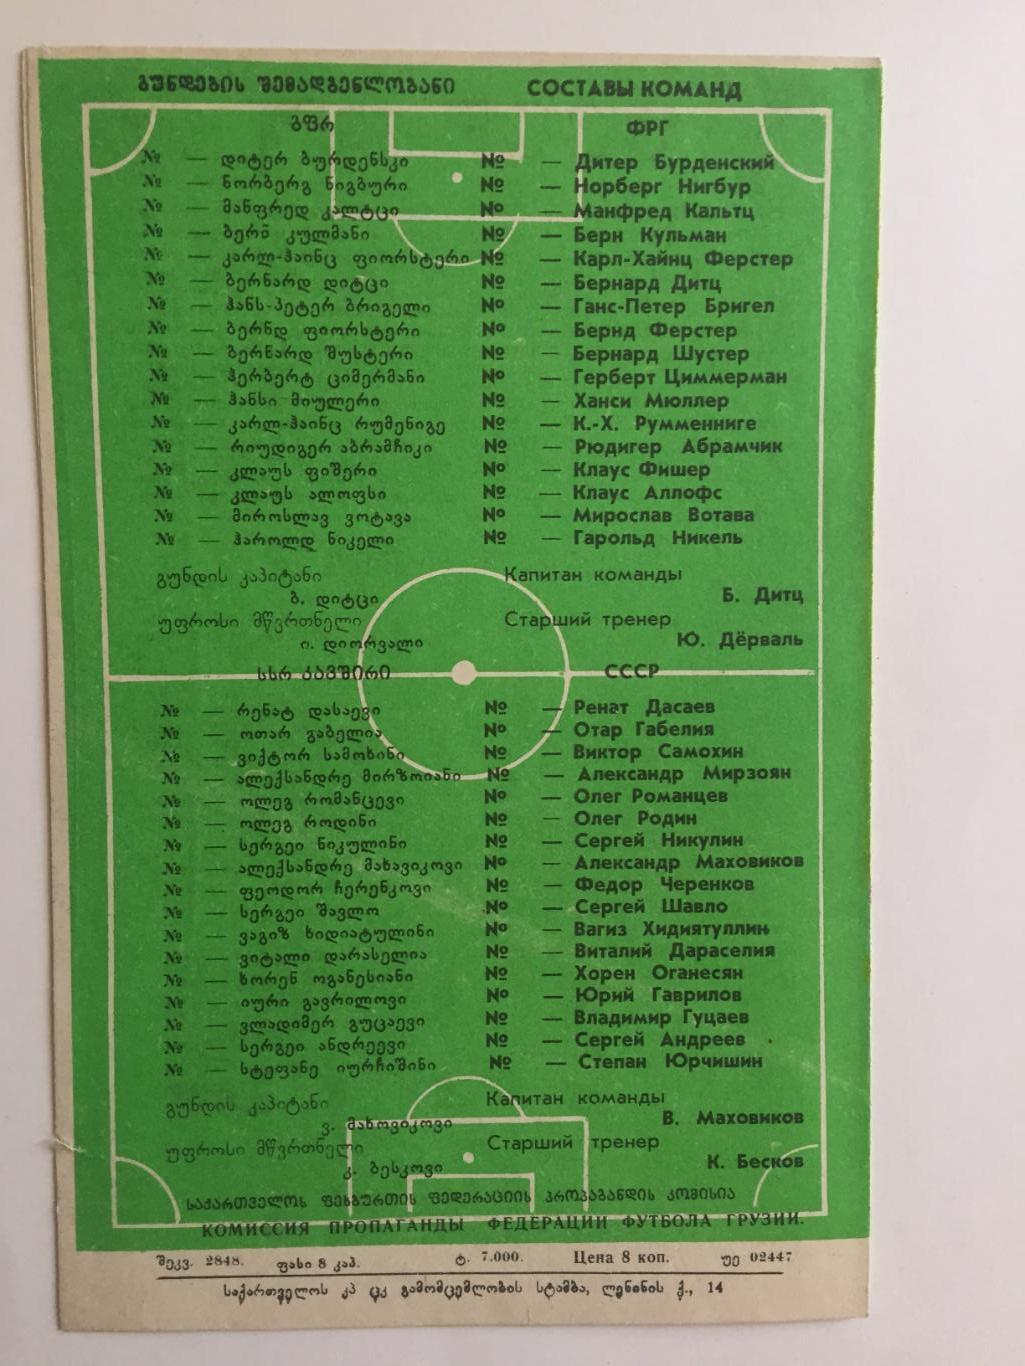 Футбол.СССР - ФРГ 21.11.1979 ТМ 1